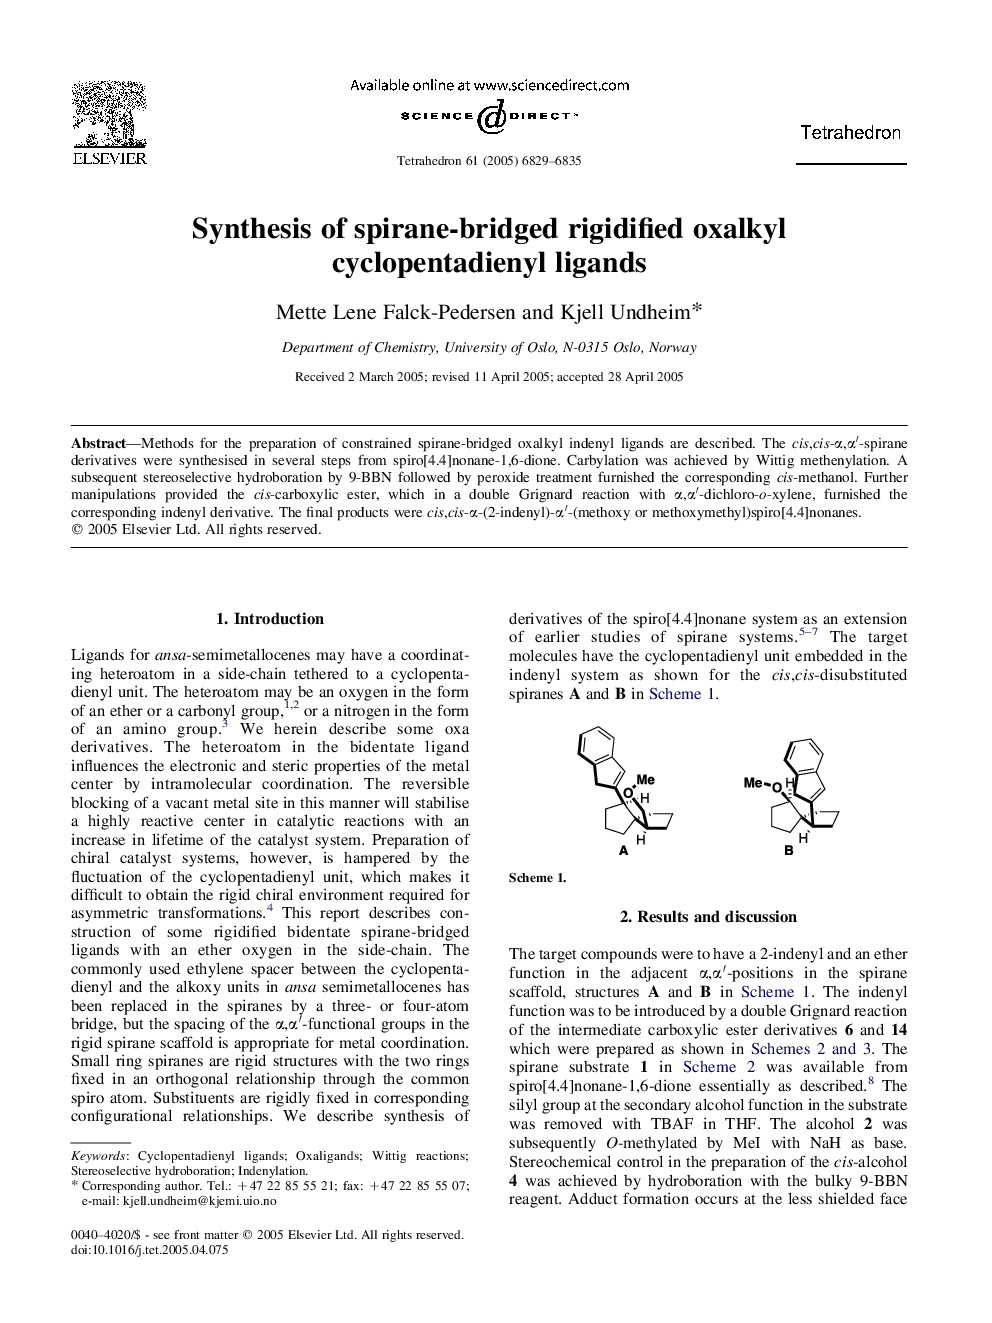 Synthesis of spirane-bridged rigidified oxalkyl cyclopentadienyl ligands